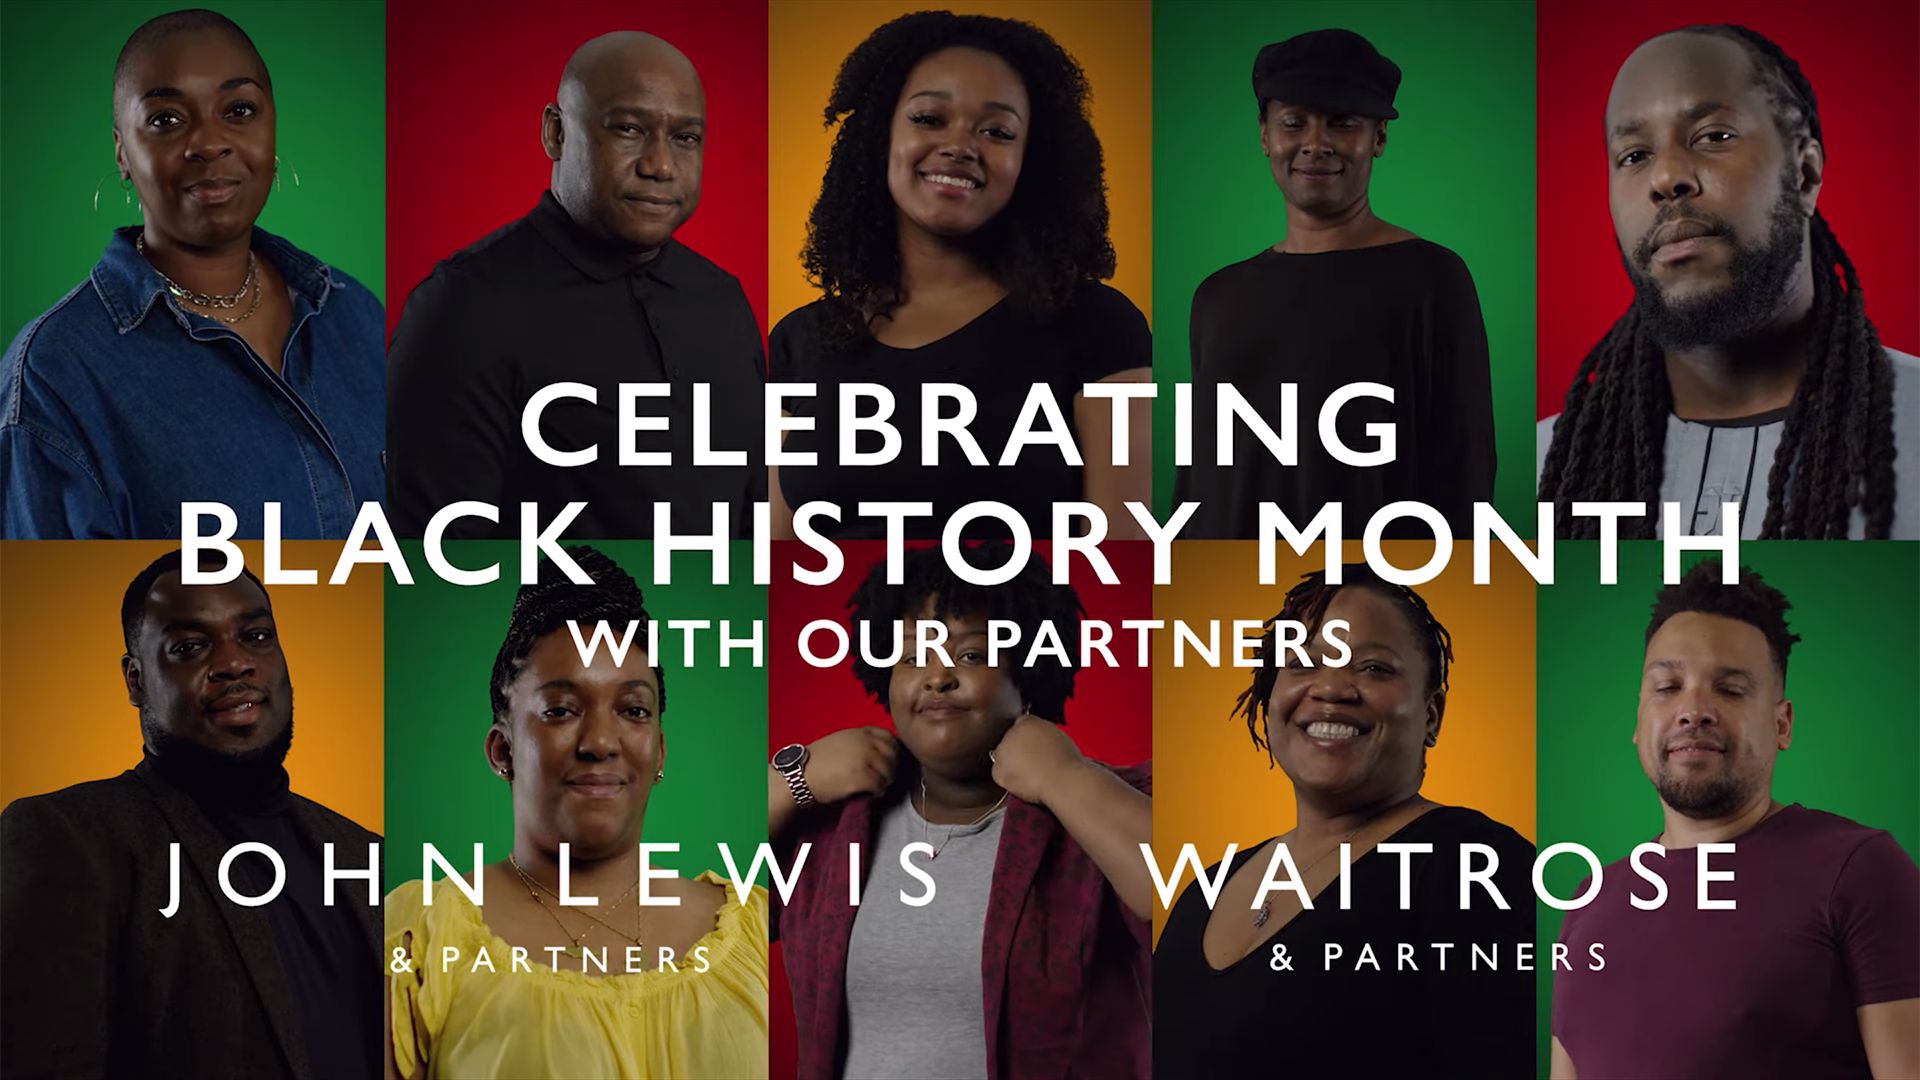 John Lewis & Partners - Black History Month